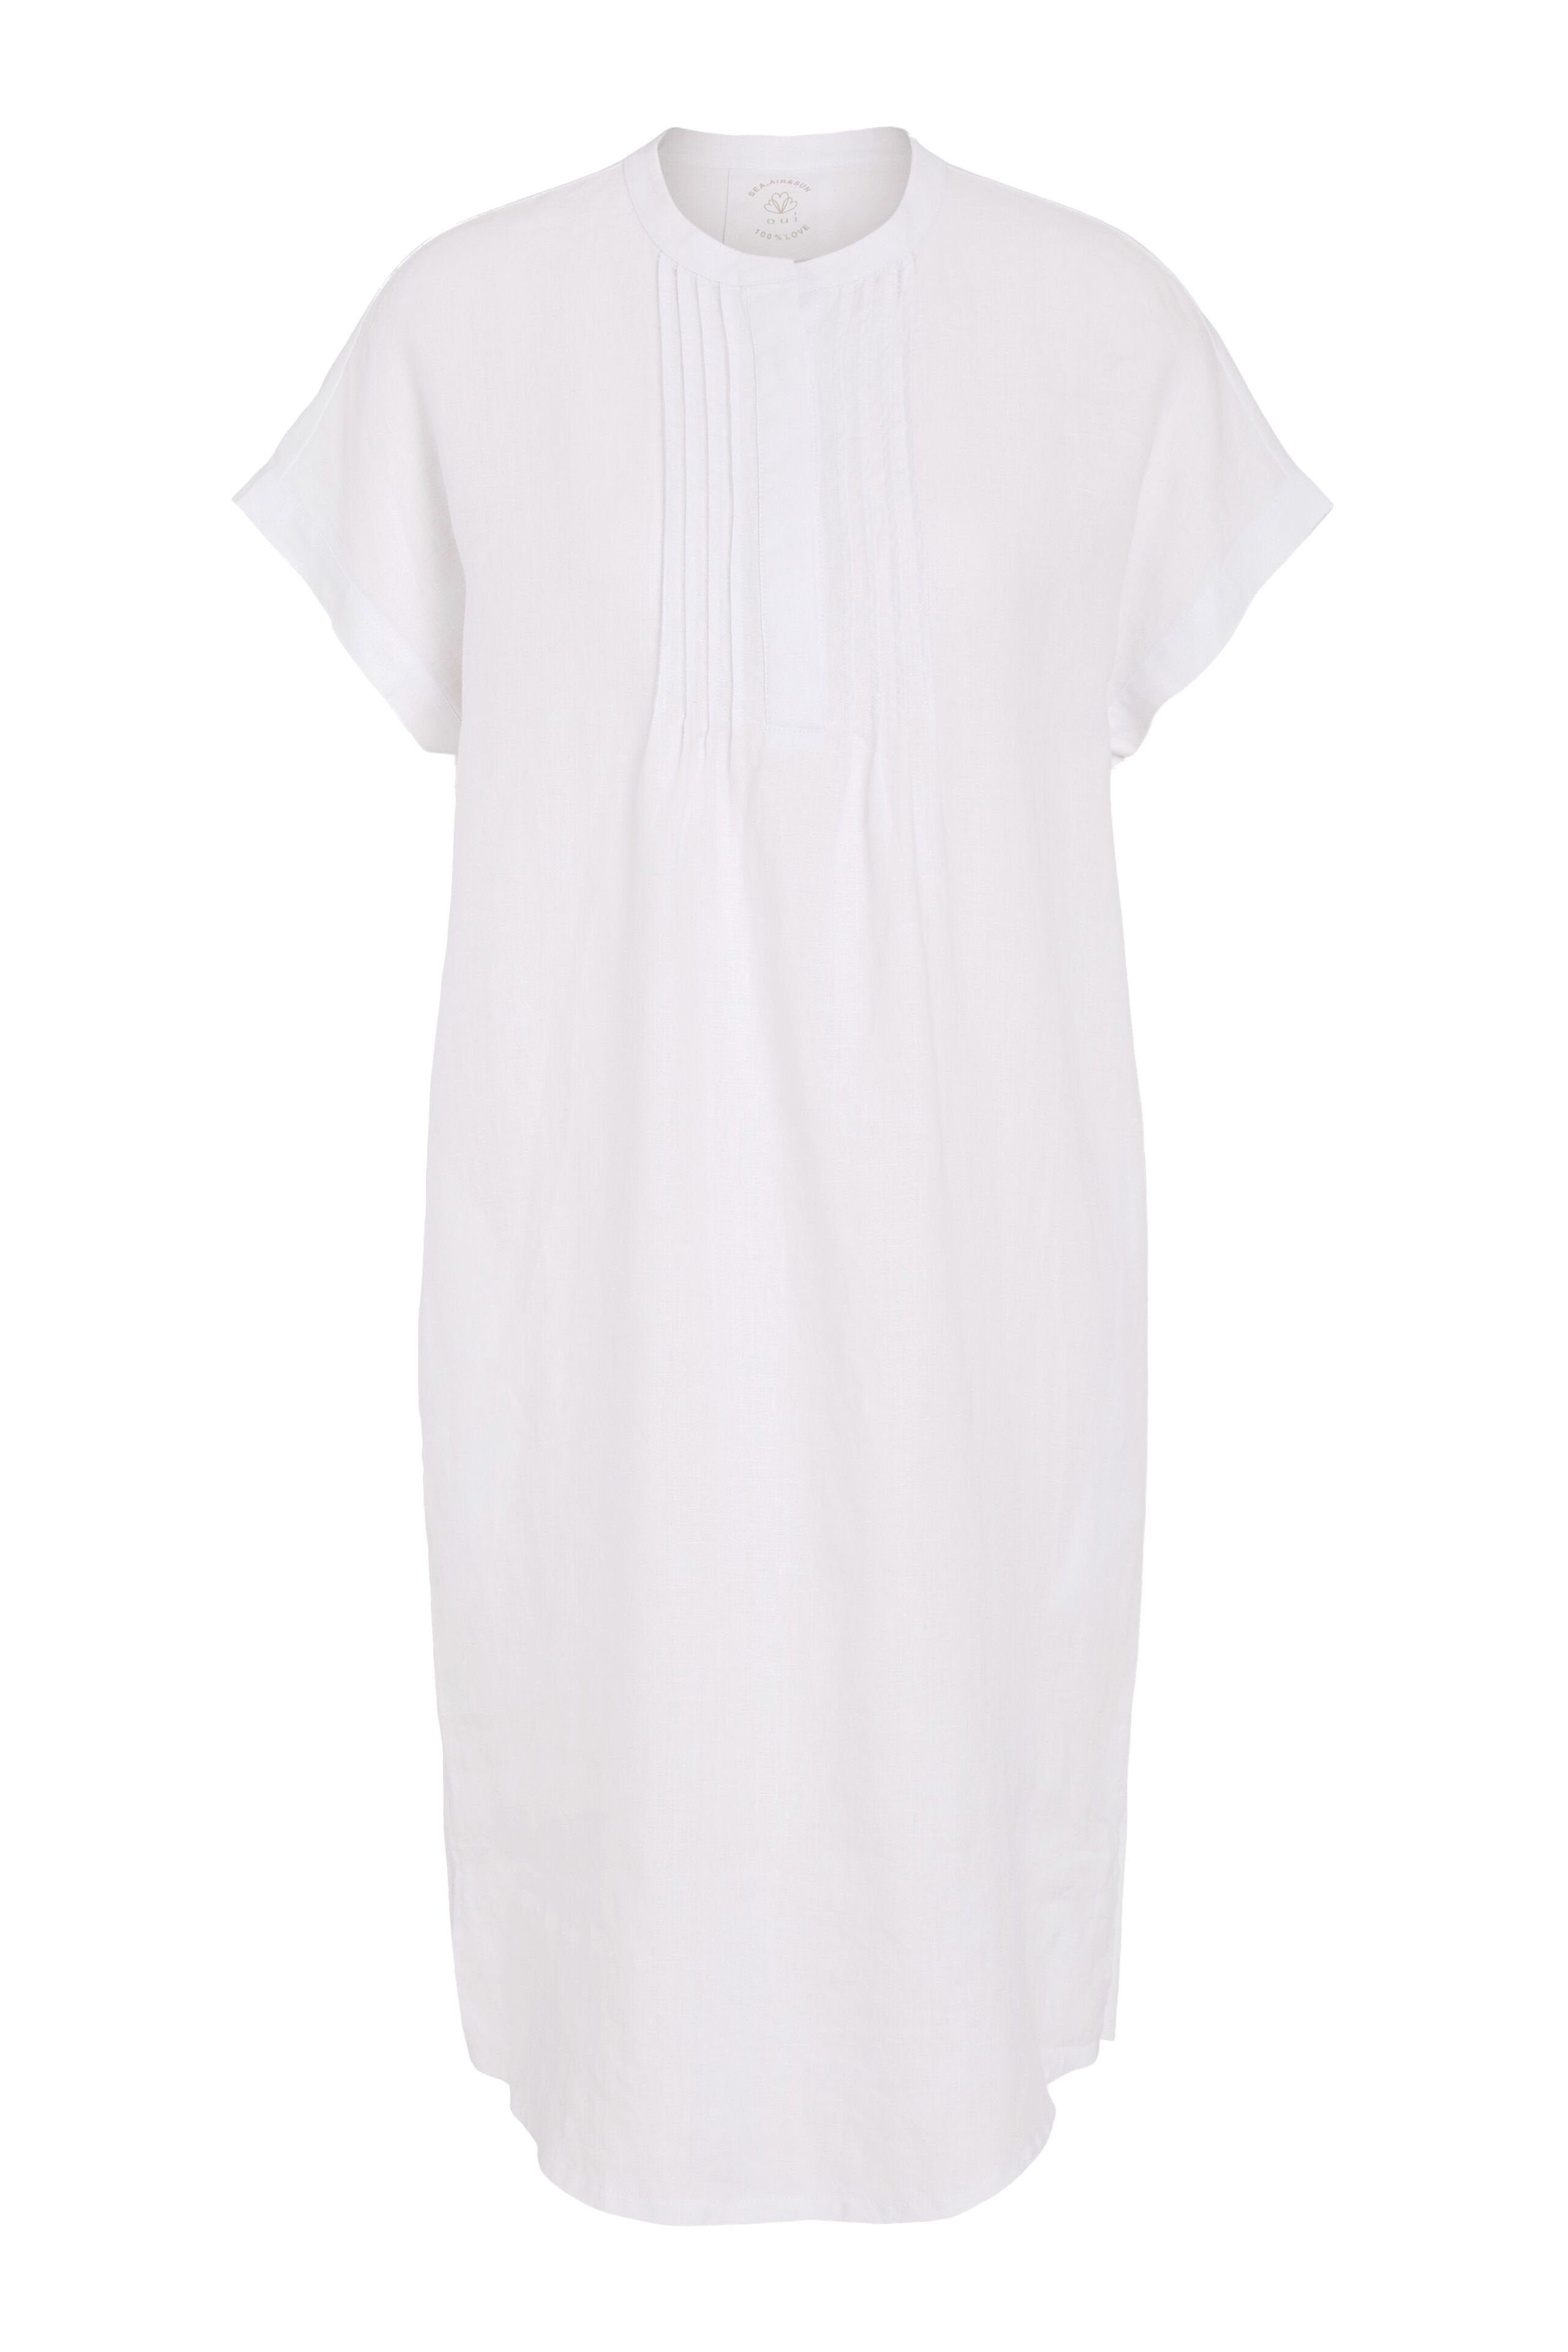 Oui Sommerkleid Leinenkleid mit Jersey Patch optic white